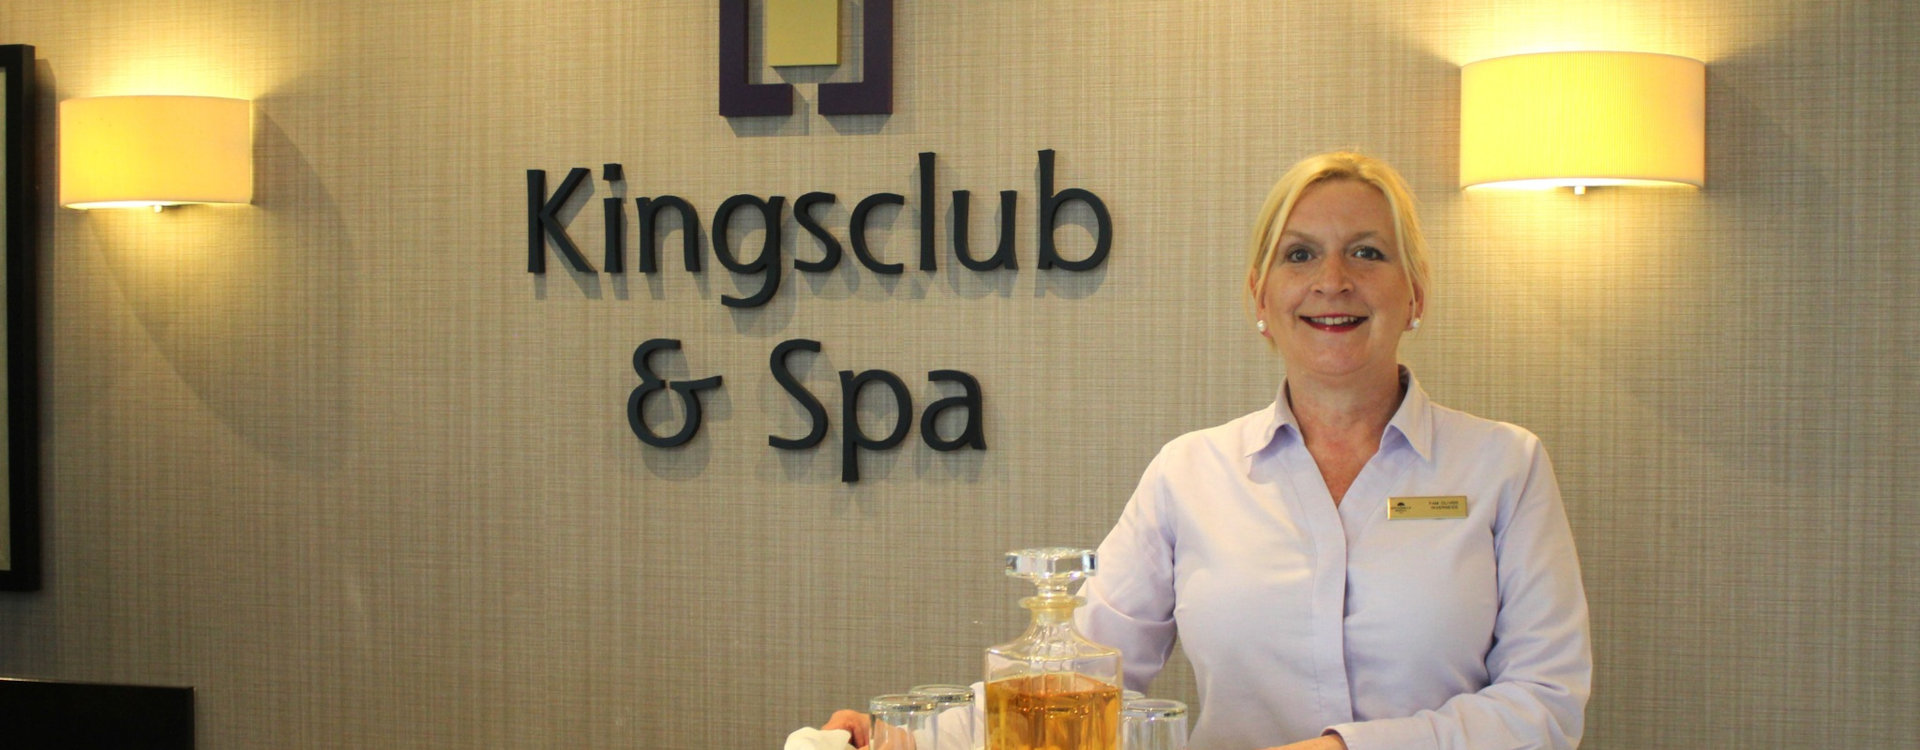 Application Form Careers At The Kingsmills Inverness Kingsmills Hotel 4225